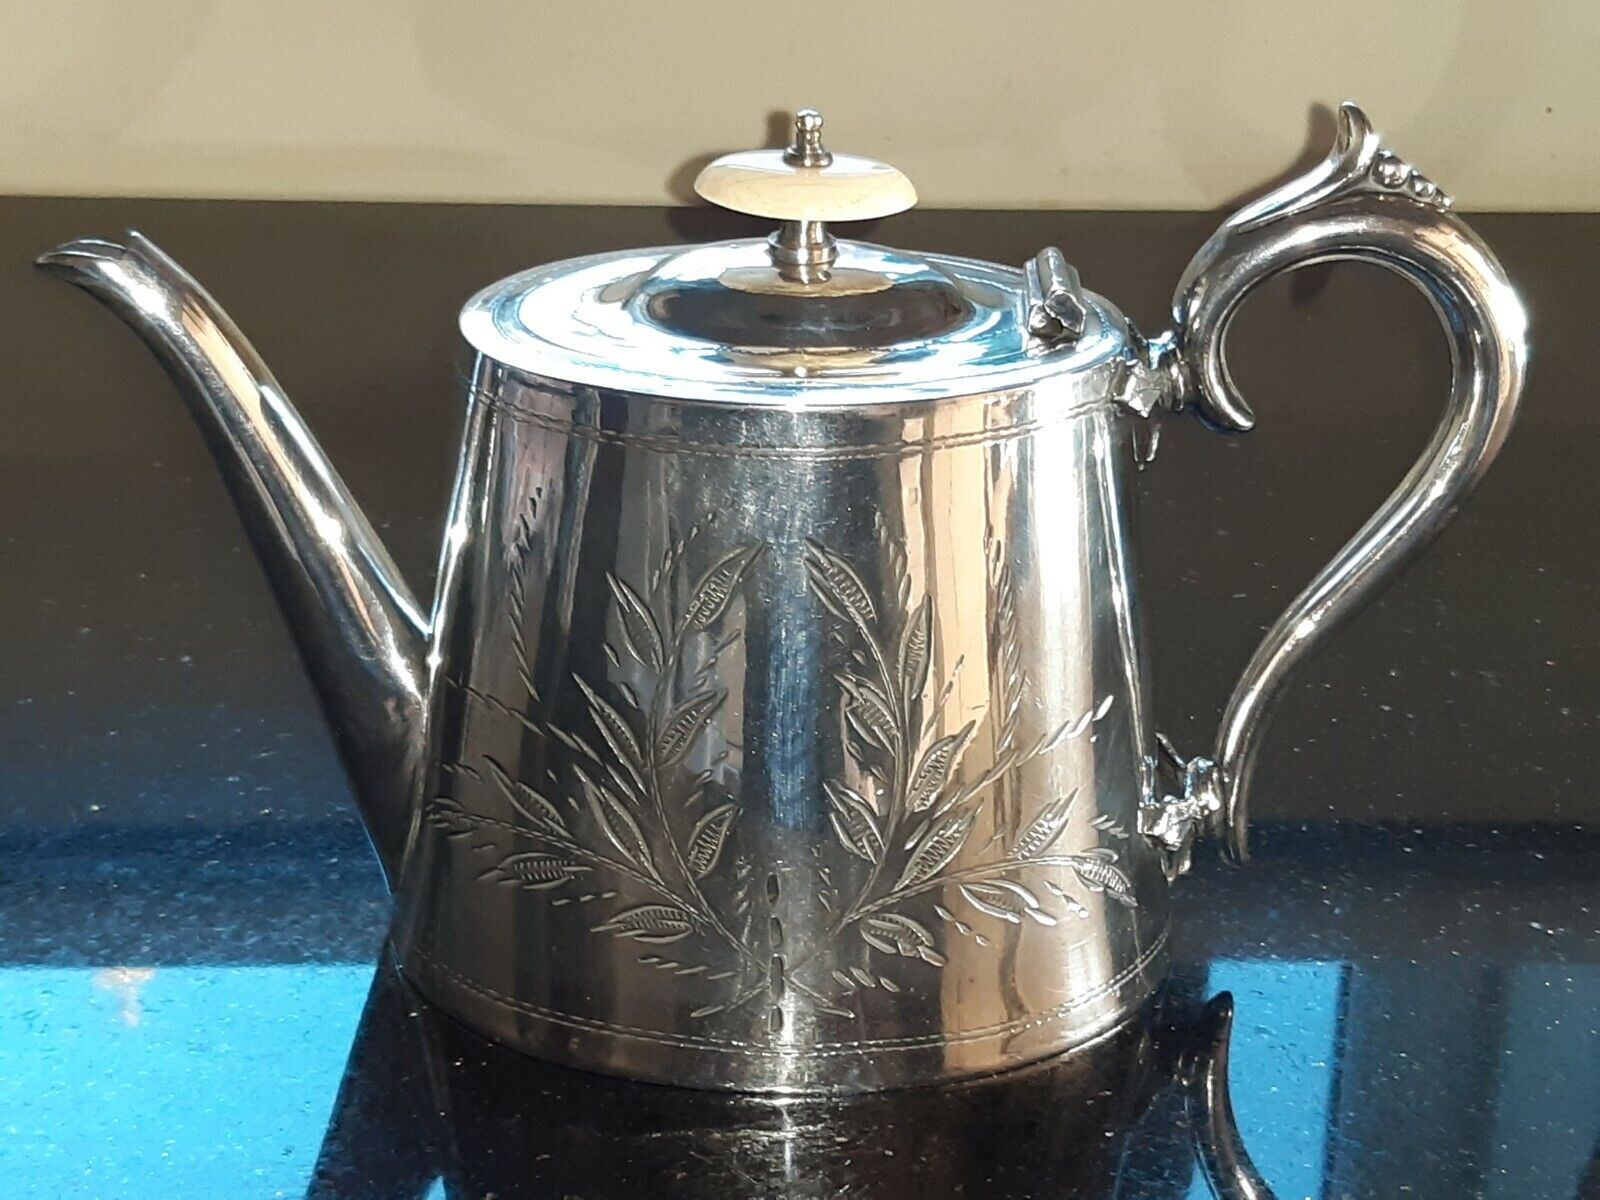  Victorian Teapot  Antique Silver Plated Circa 1890s